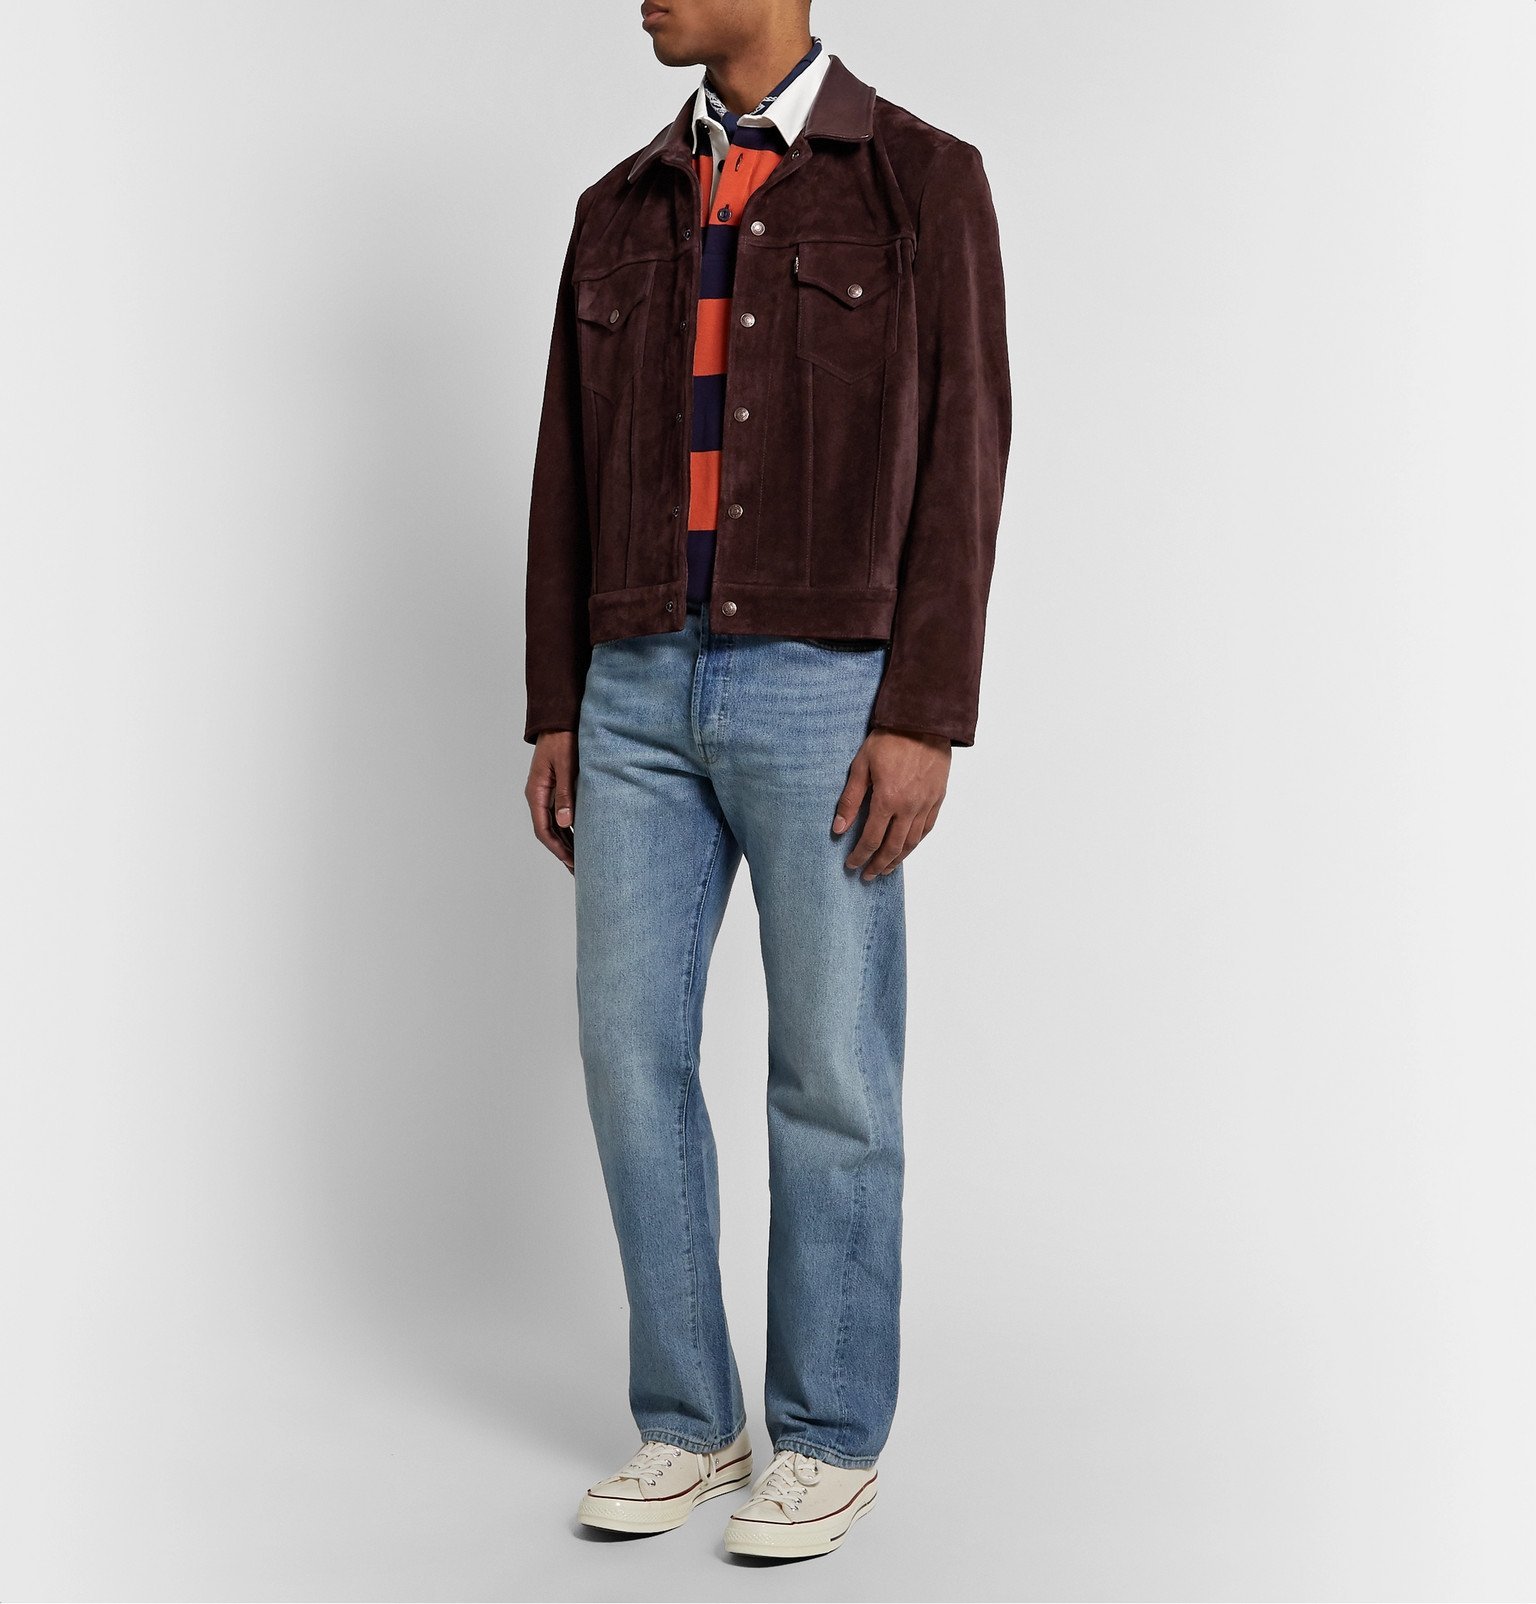 Levi's Vintage Clothing - Leather-Trimmed Suede Trucker Jacket - Brown ...